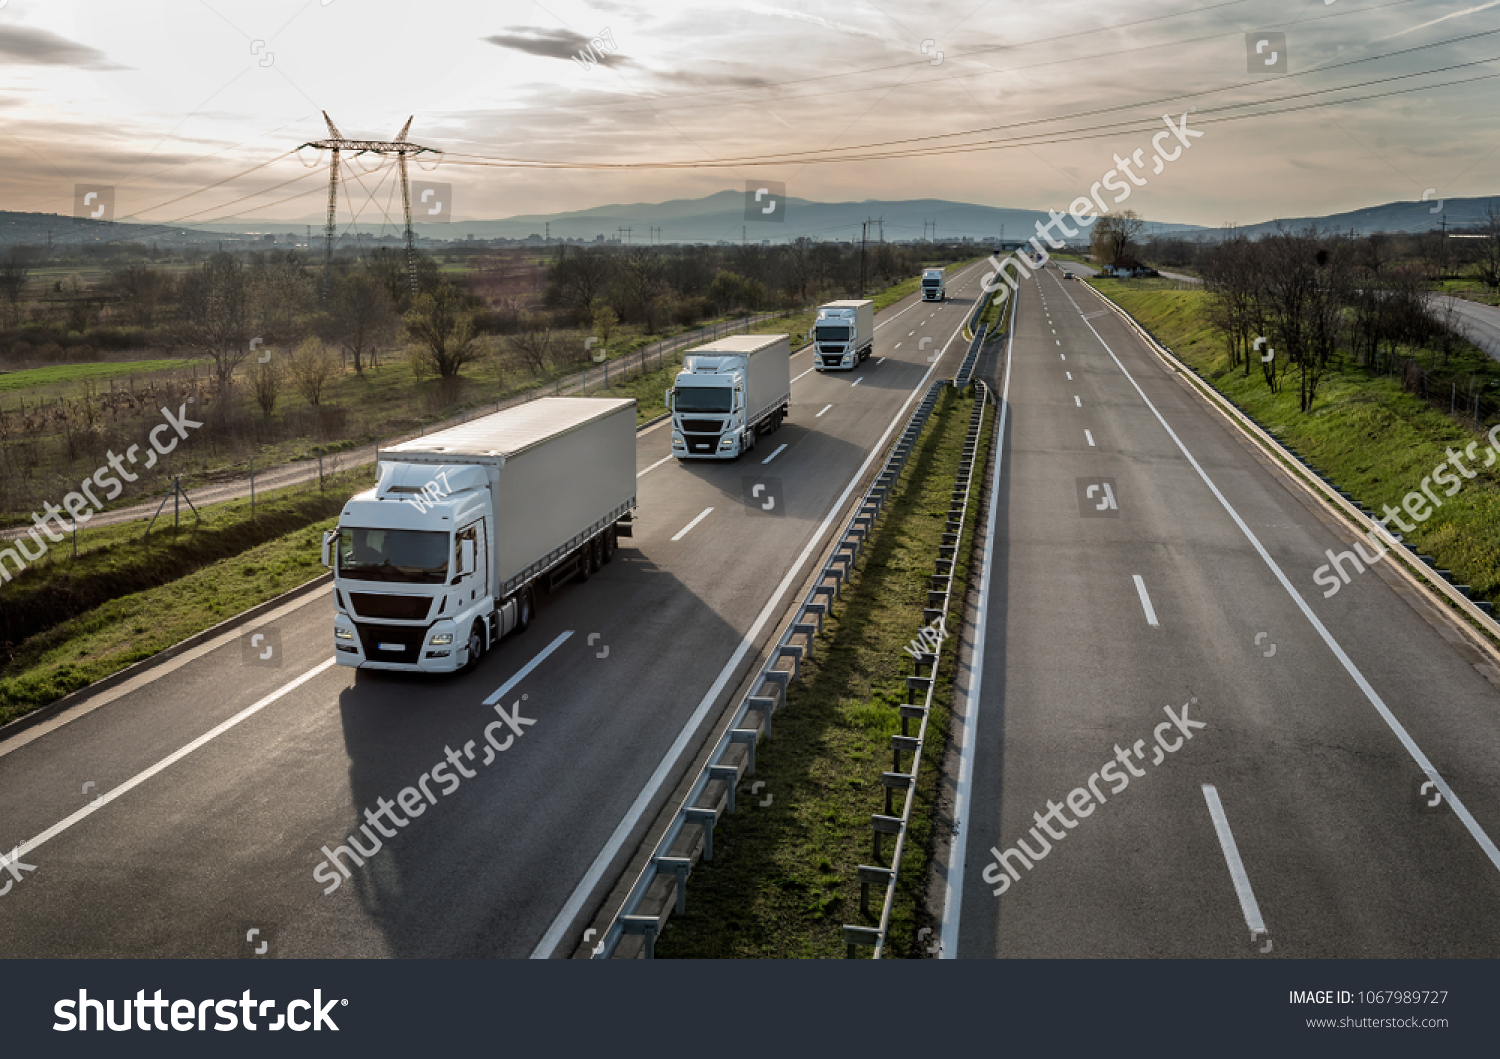 Caravan or convoy of trucks in line on a country highway #1067989727